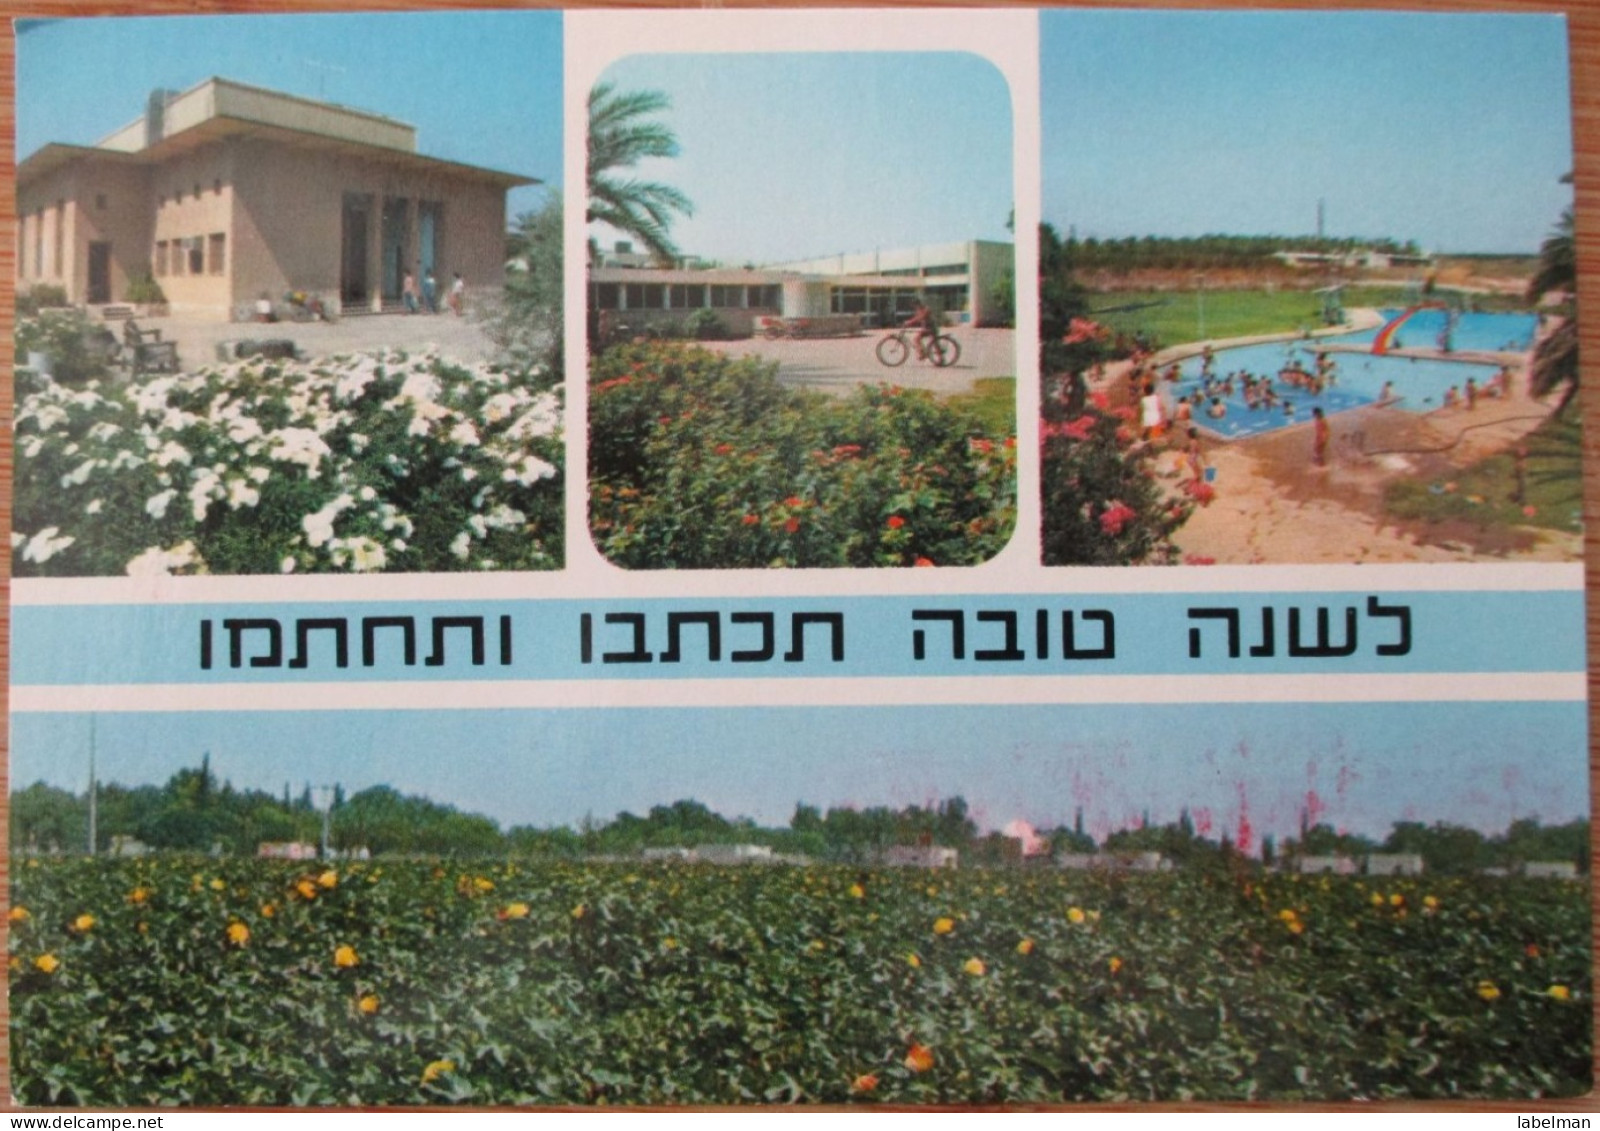 ISRAEL BEIT SHEAAN KIBBUTZ TYRAT ZVI SHANA TOVA NEW YEAR CARD POSTCARD CARTE POSTALE ANSICHTSKARTE CARTOLINA POSTKARTE - Israel